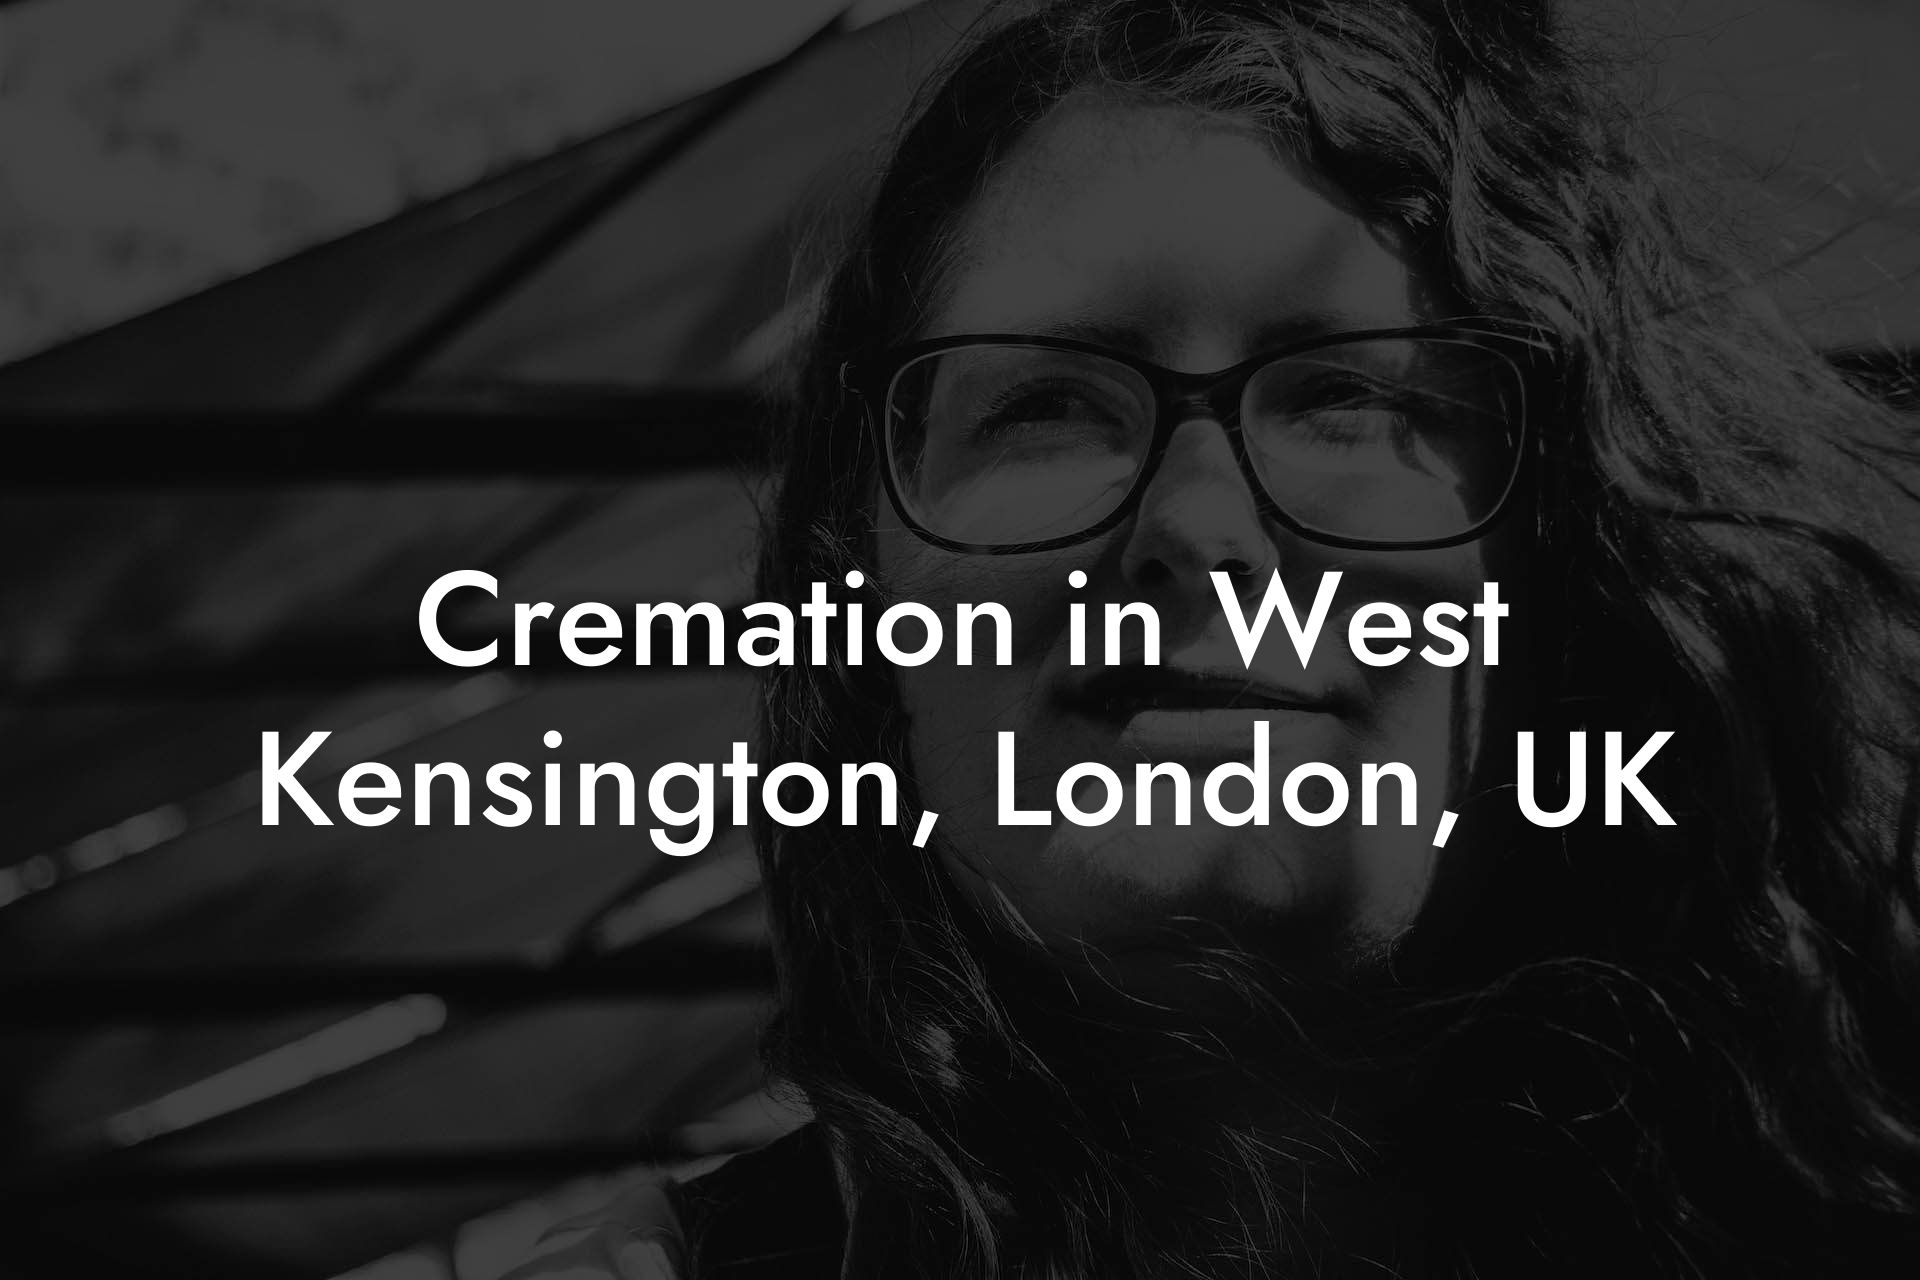 Cremation in West Kensington, London, UK